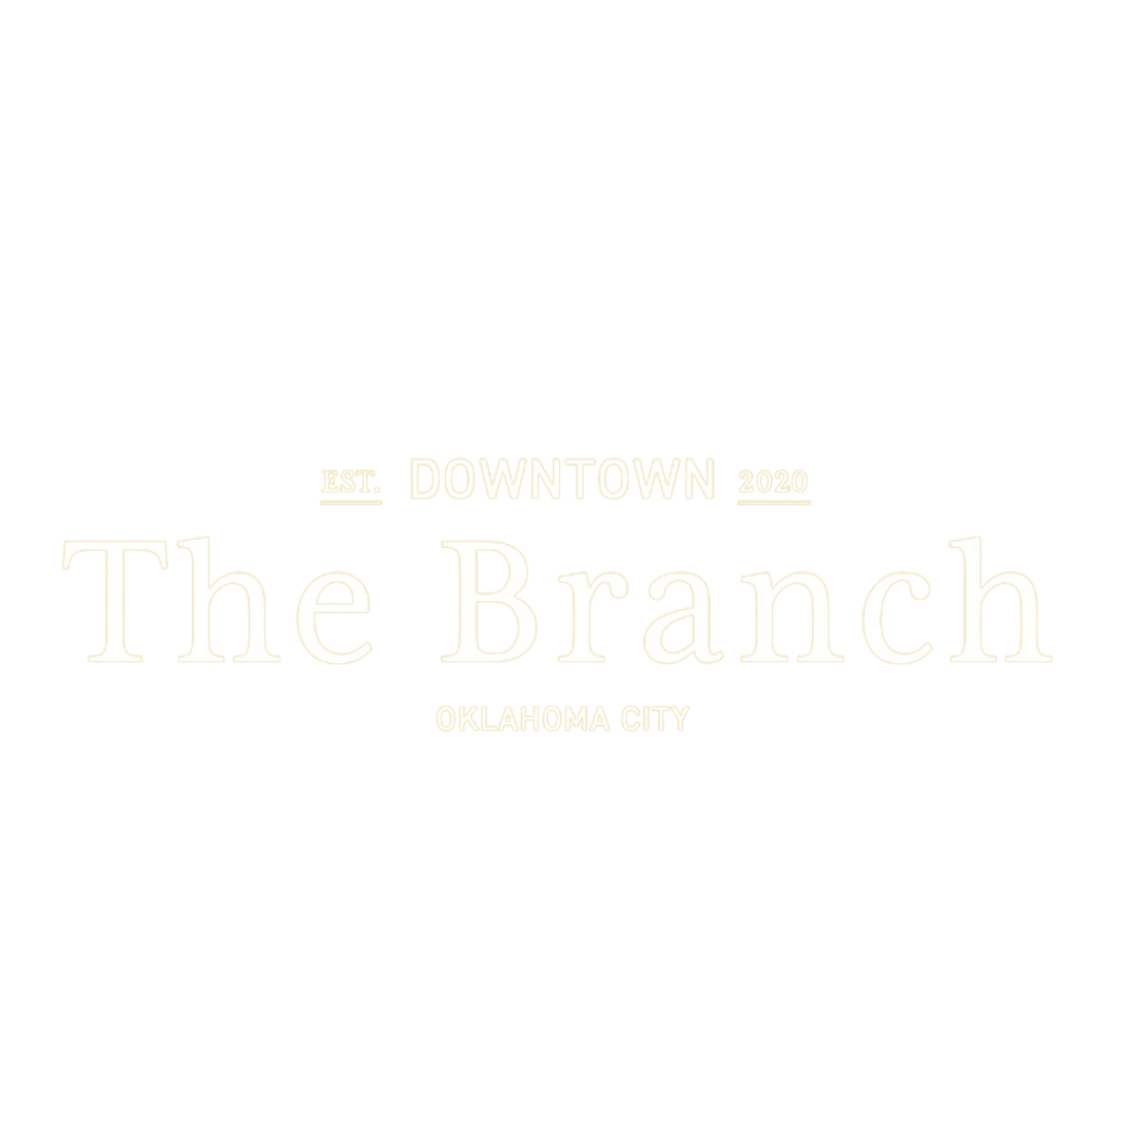 The Branch OKC